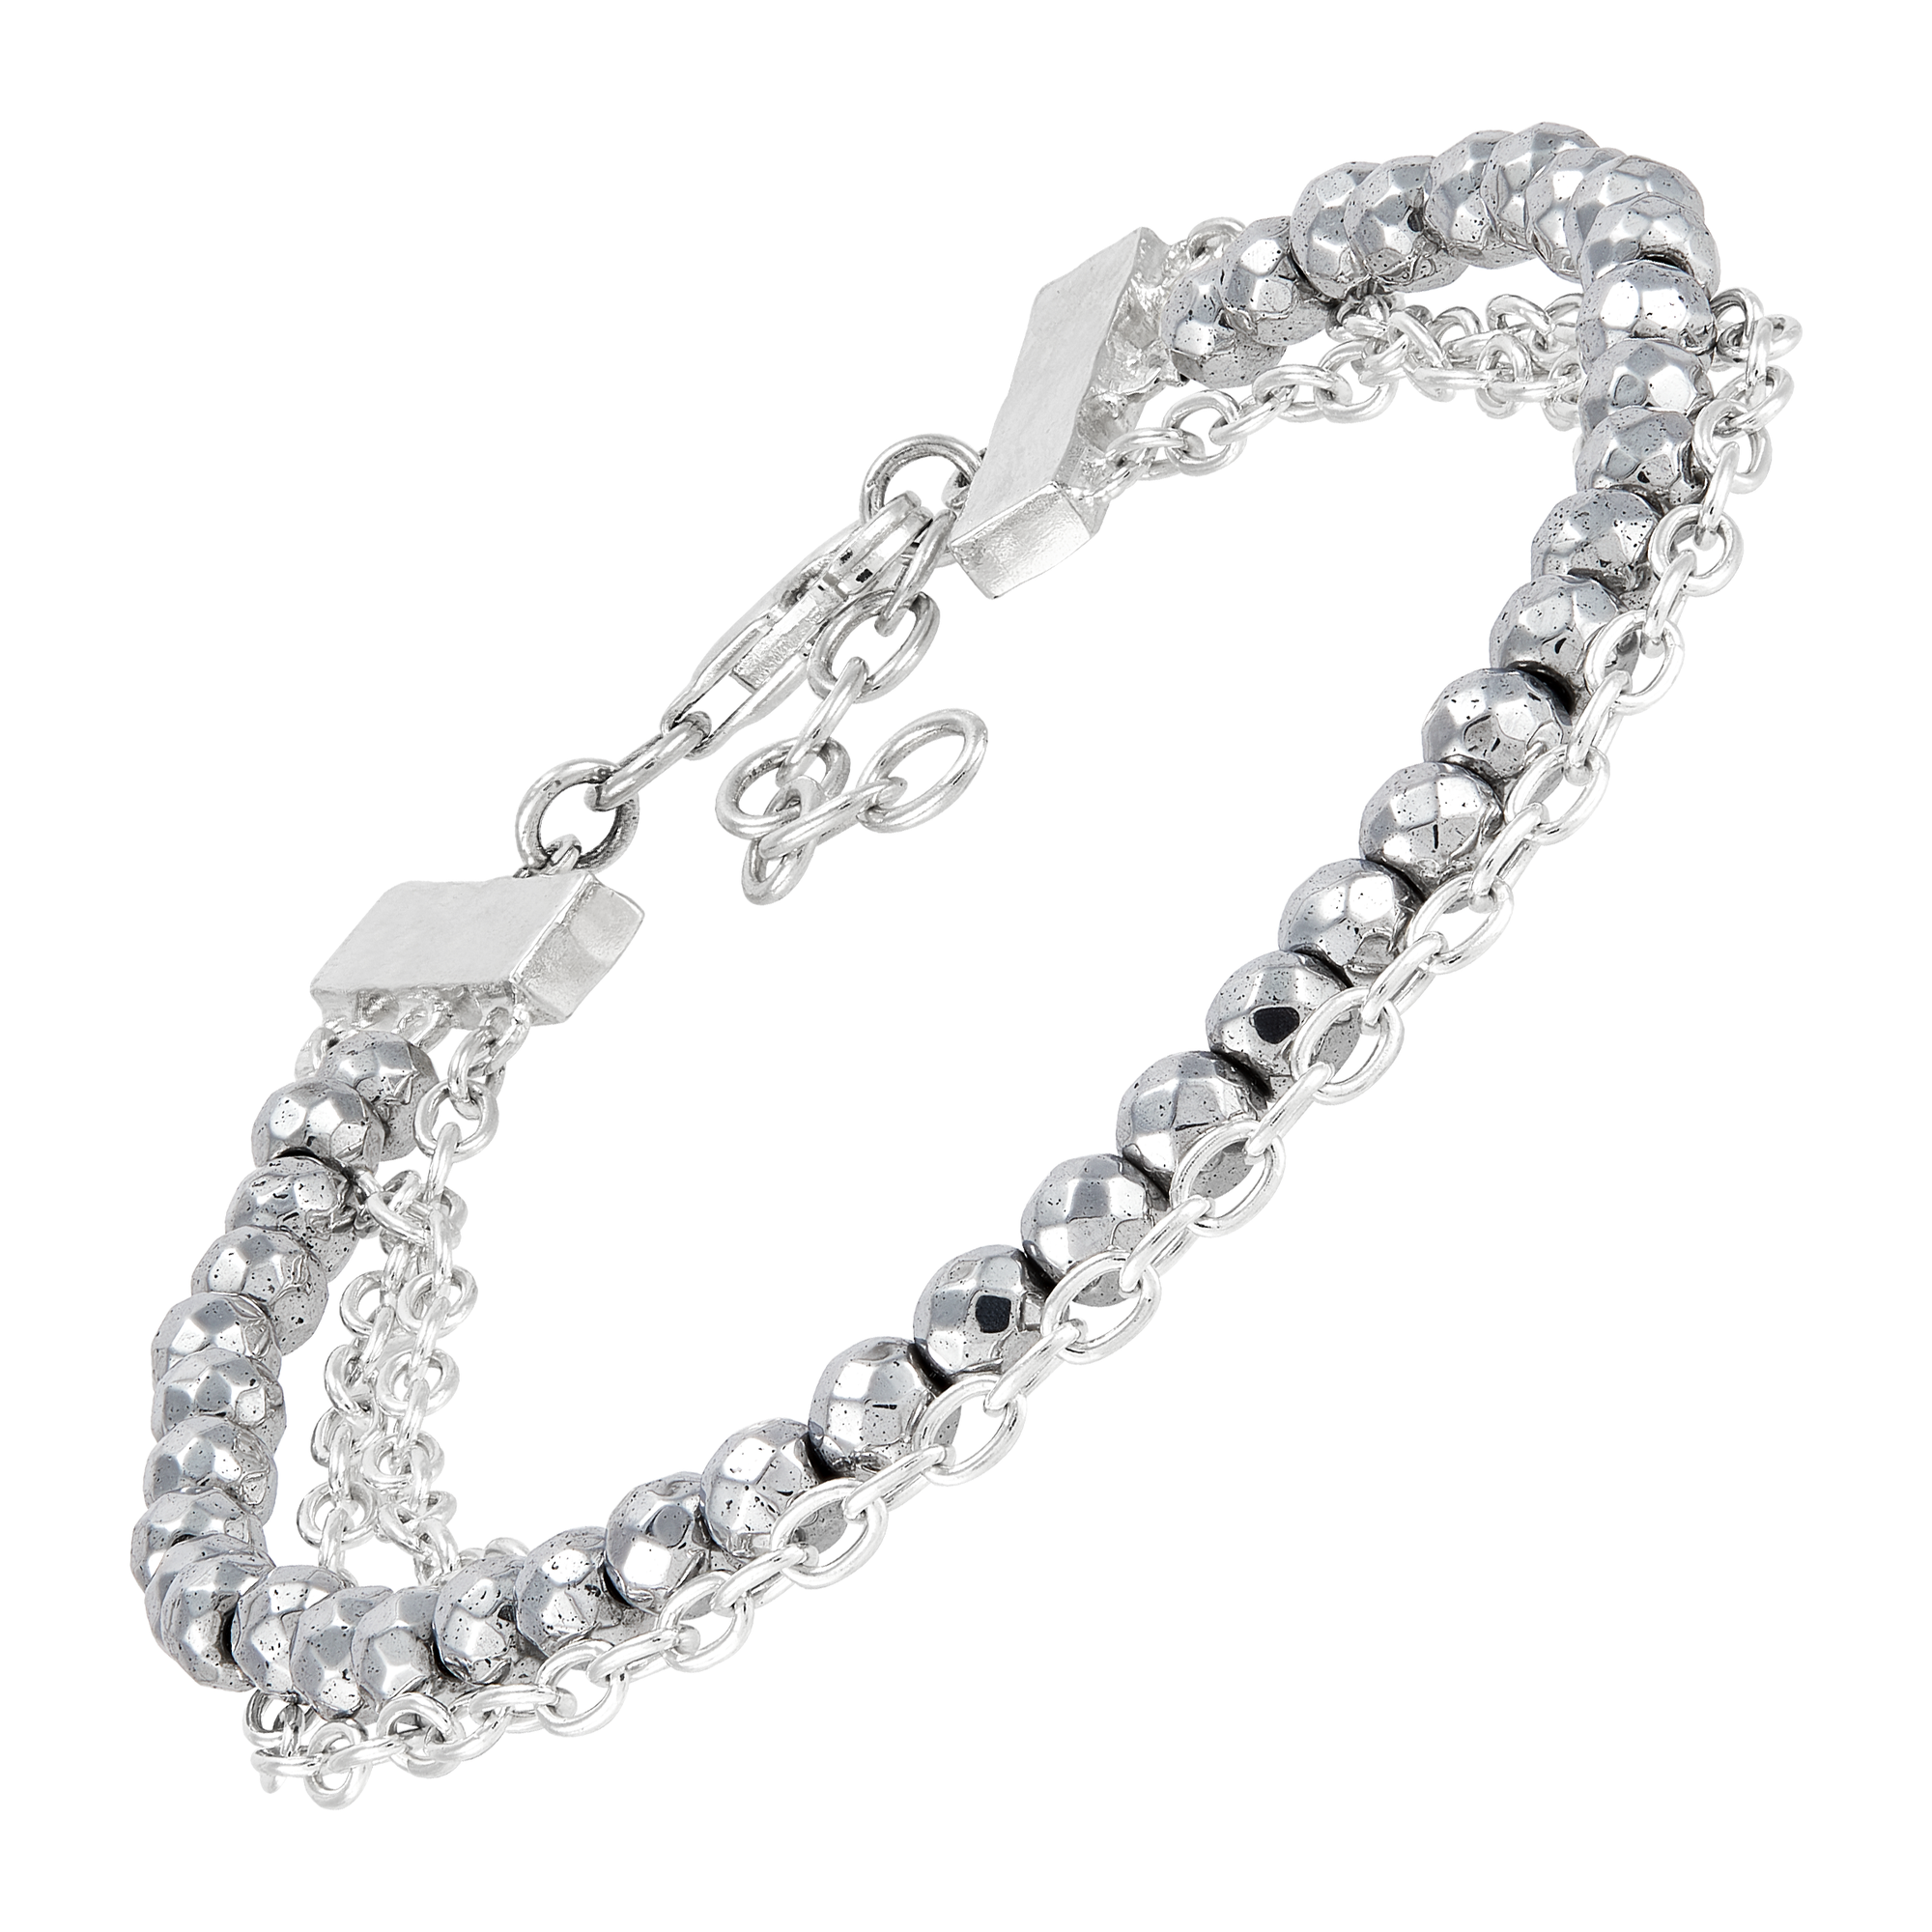 Silpada 'Trendy' Sterling Silver Natural Hematite Bracelet 8.5"